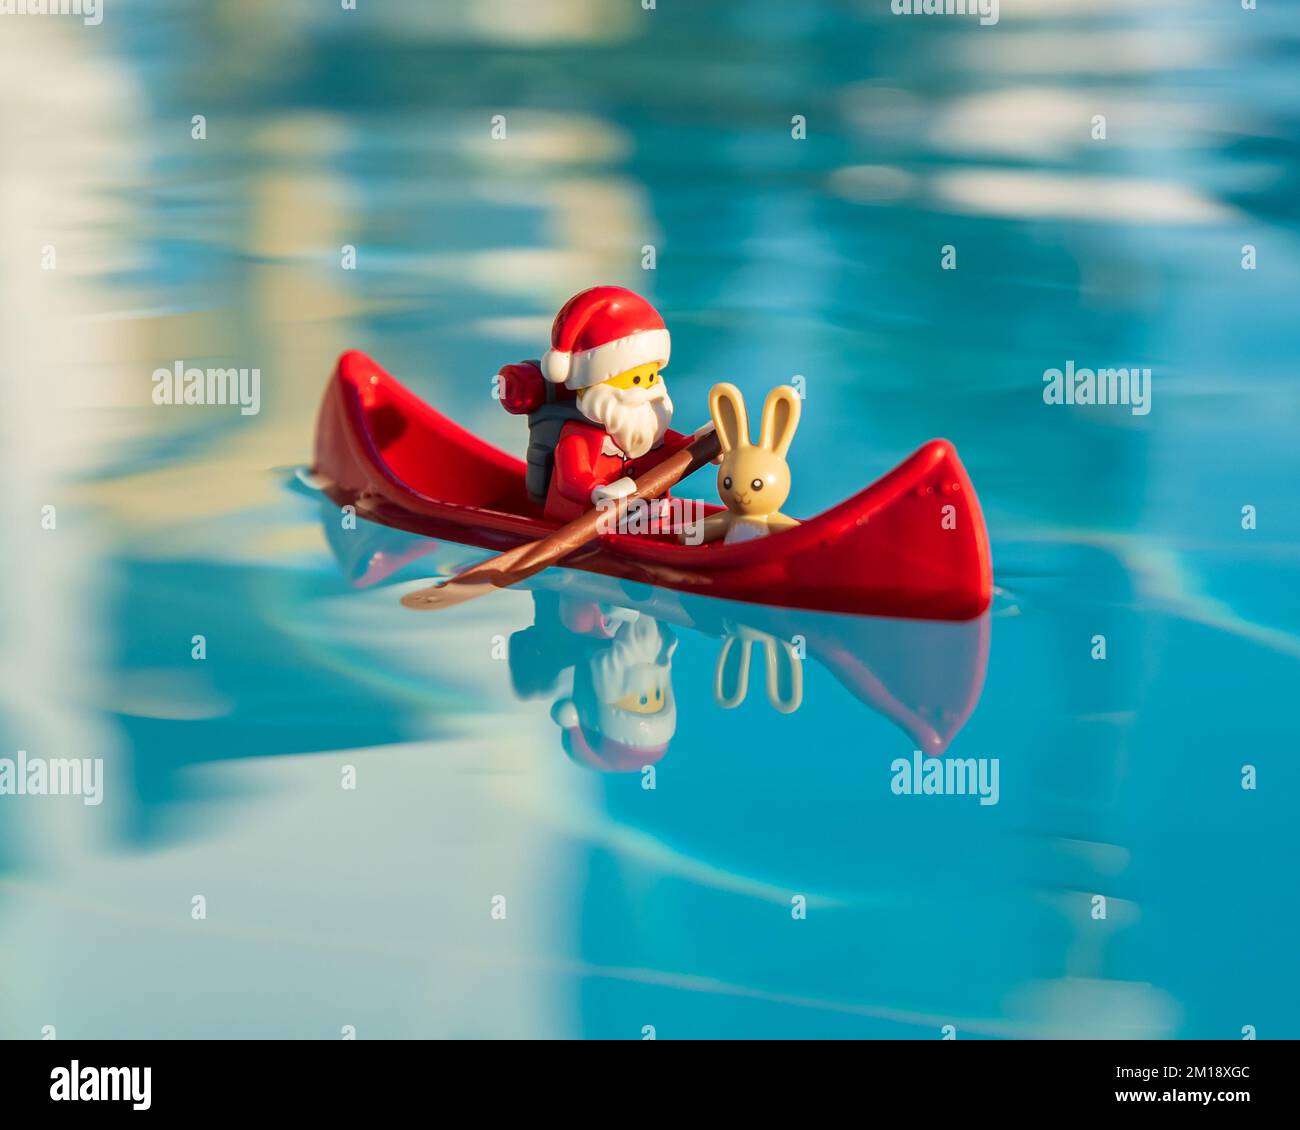 LEGO-Minifigure-Weihnachtsklausel im Urlaub Stockfoto